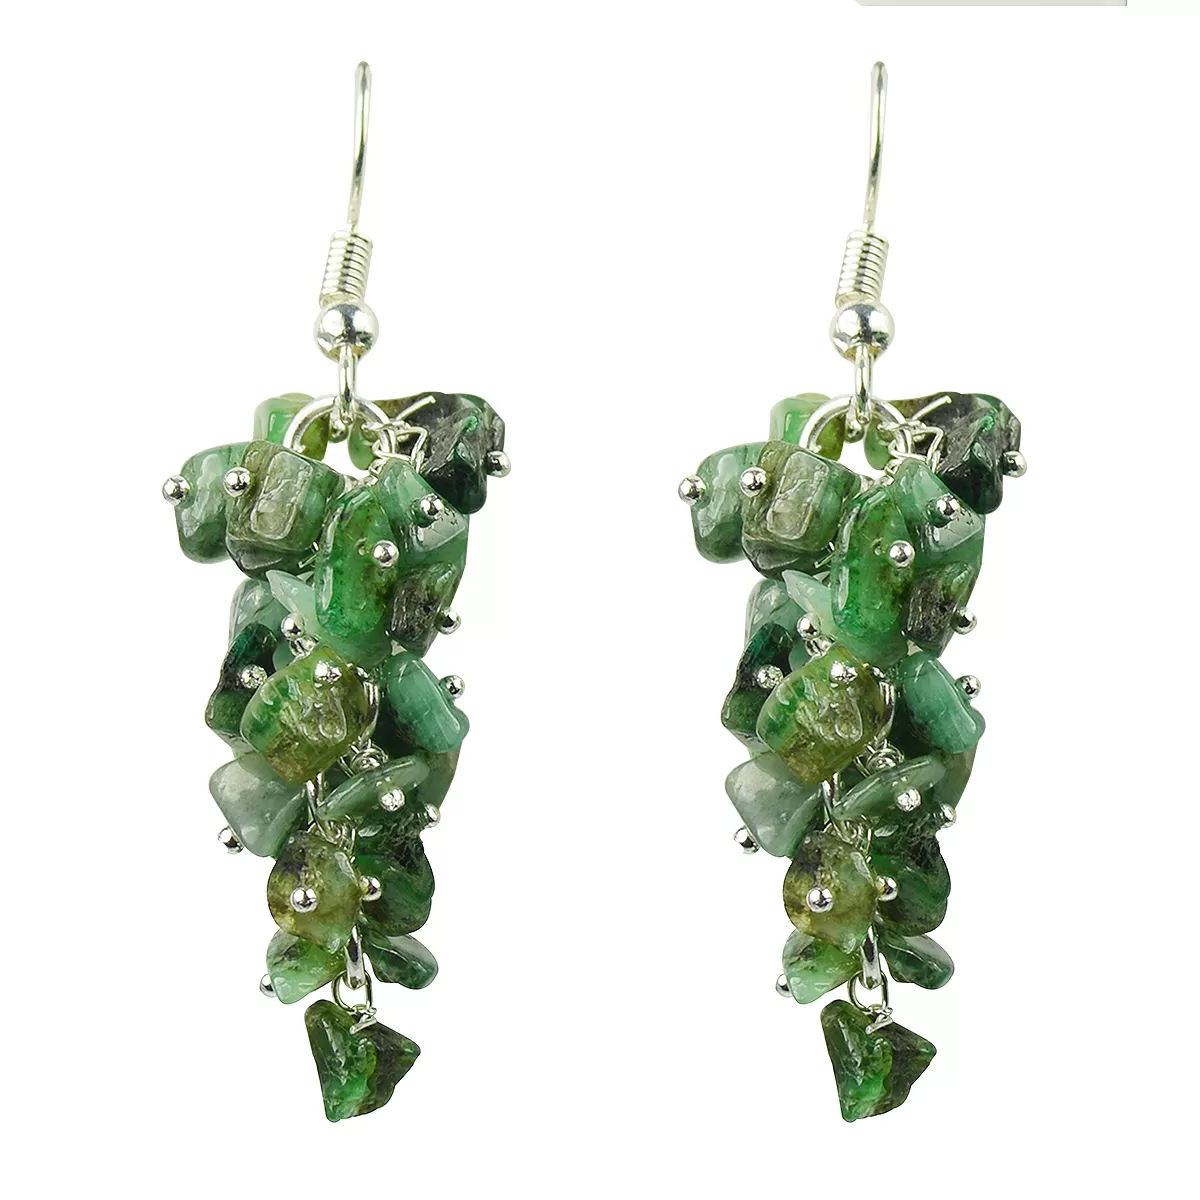 Emerald Earrings Natural Chip Beads Earrings for Women, Girls (Green)